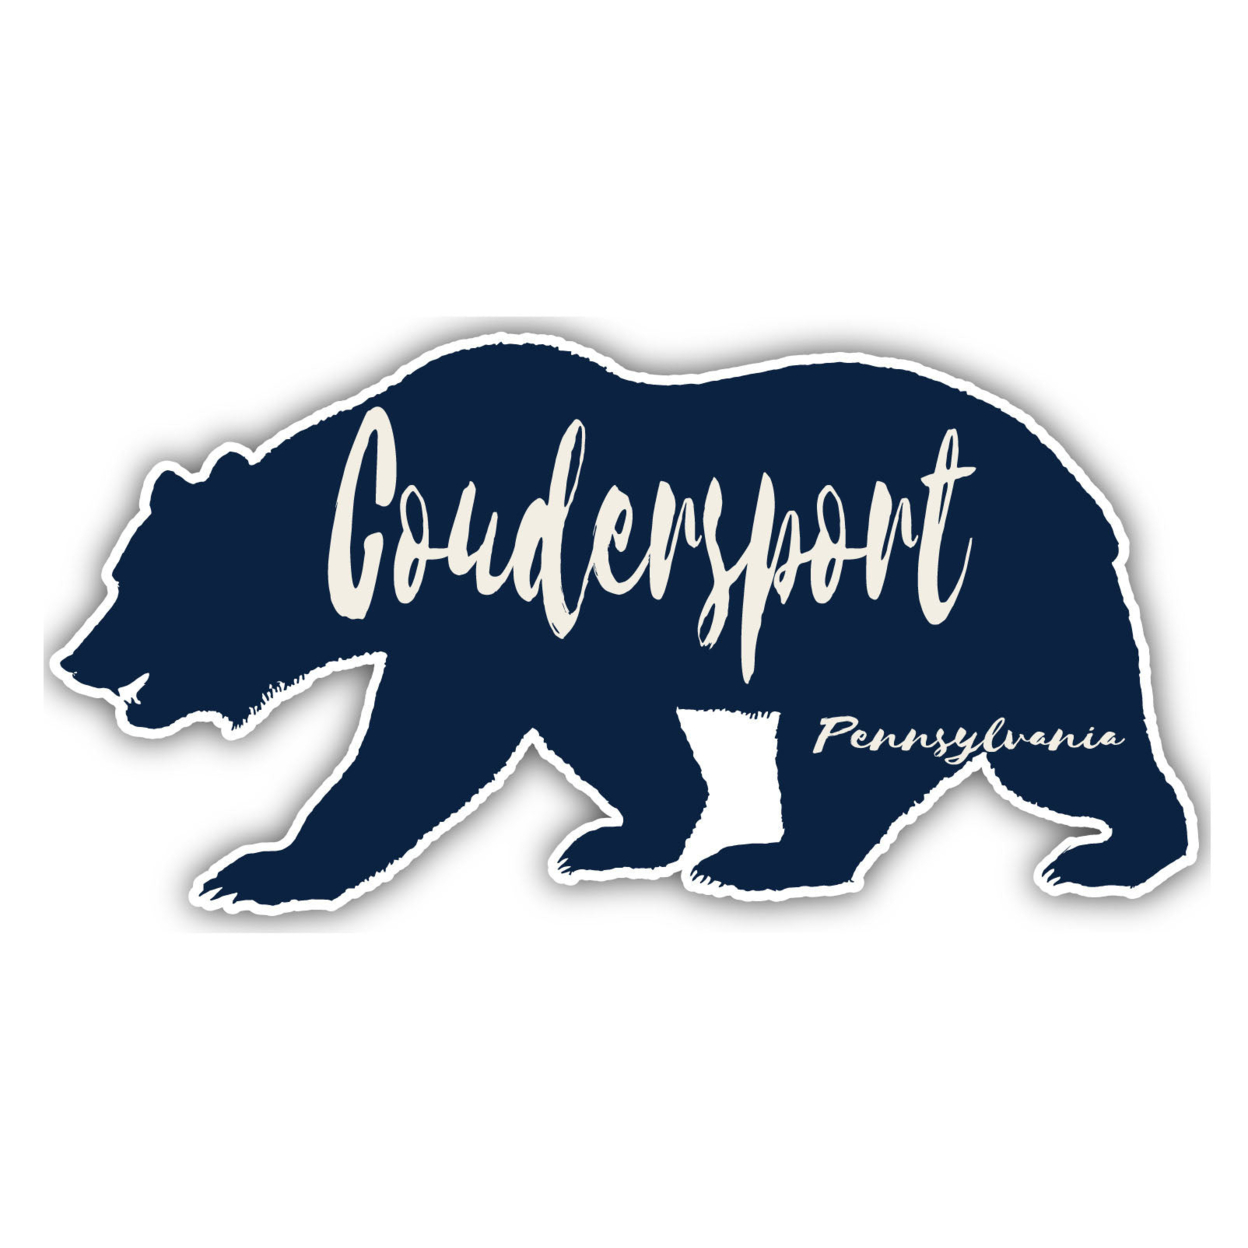 Coudersport Pennsylvania Souvenir Decorative Stickers (Choose Theme And Size) - Single Unit, 8-Inch, Adventures Awaits